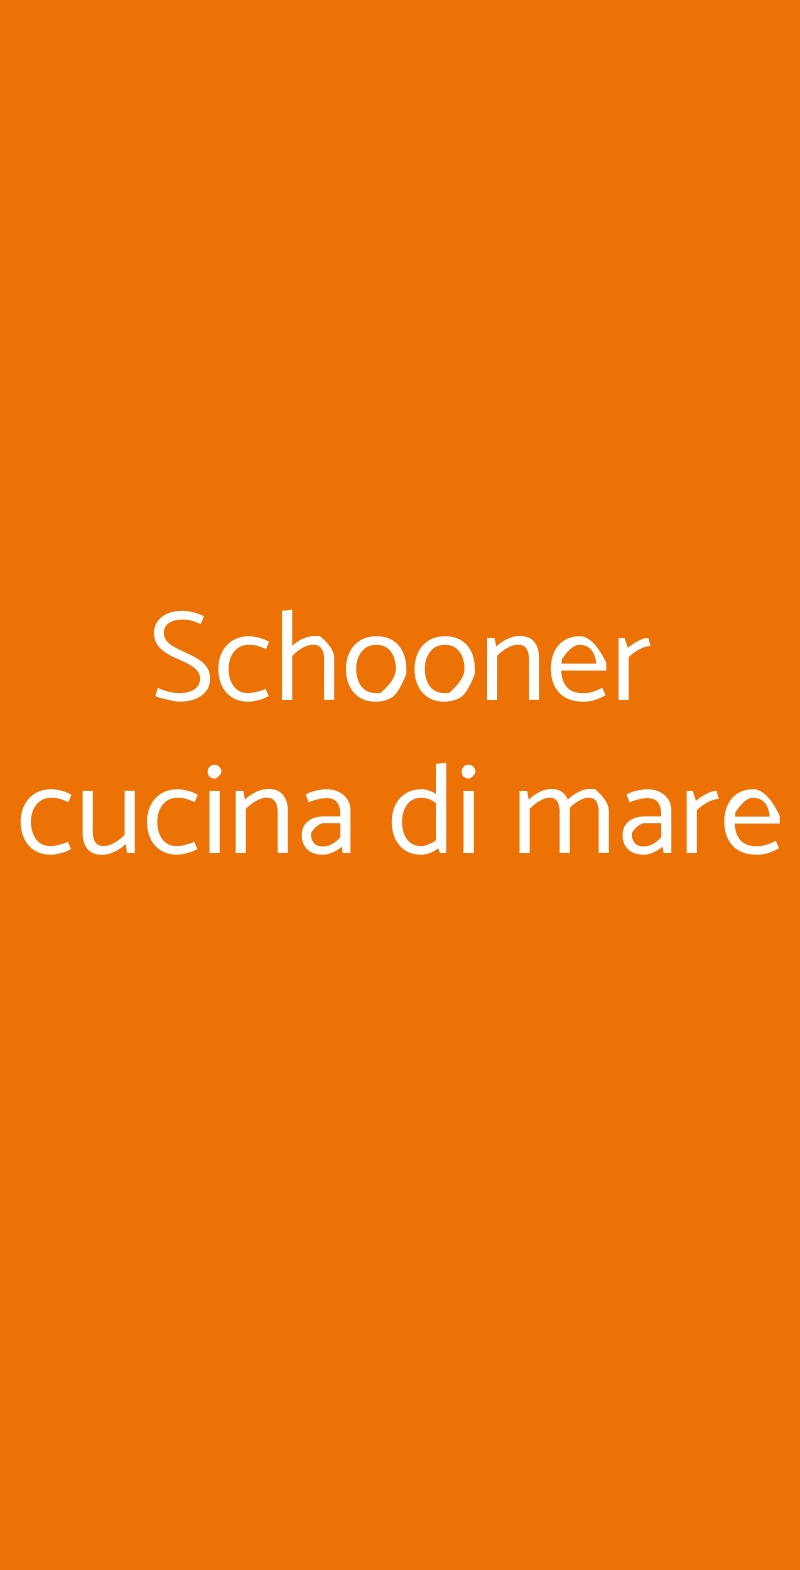 Schooner cucina di mare Milano menù 1 pagina